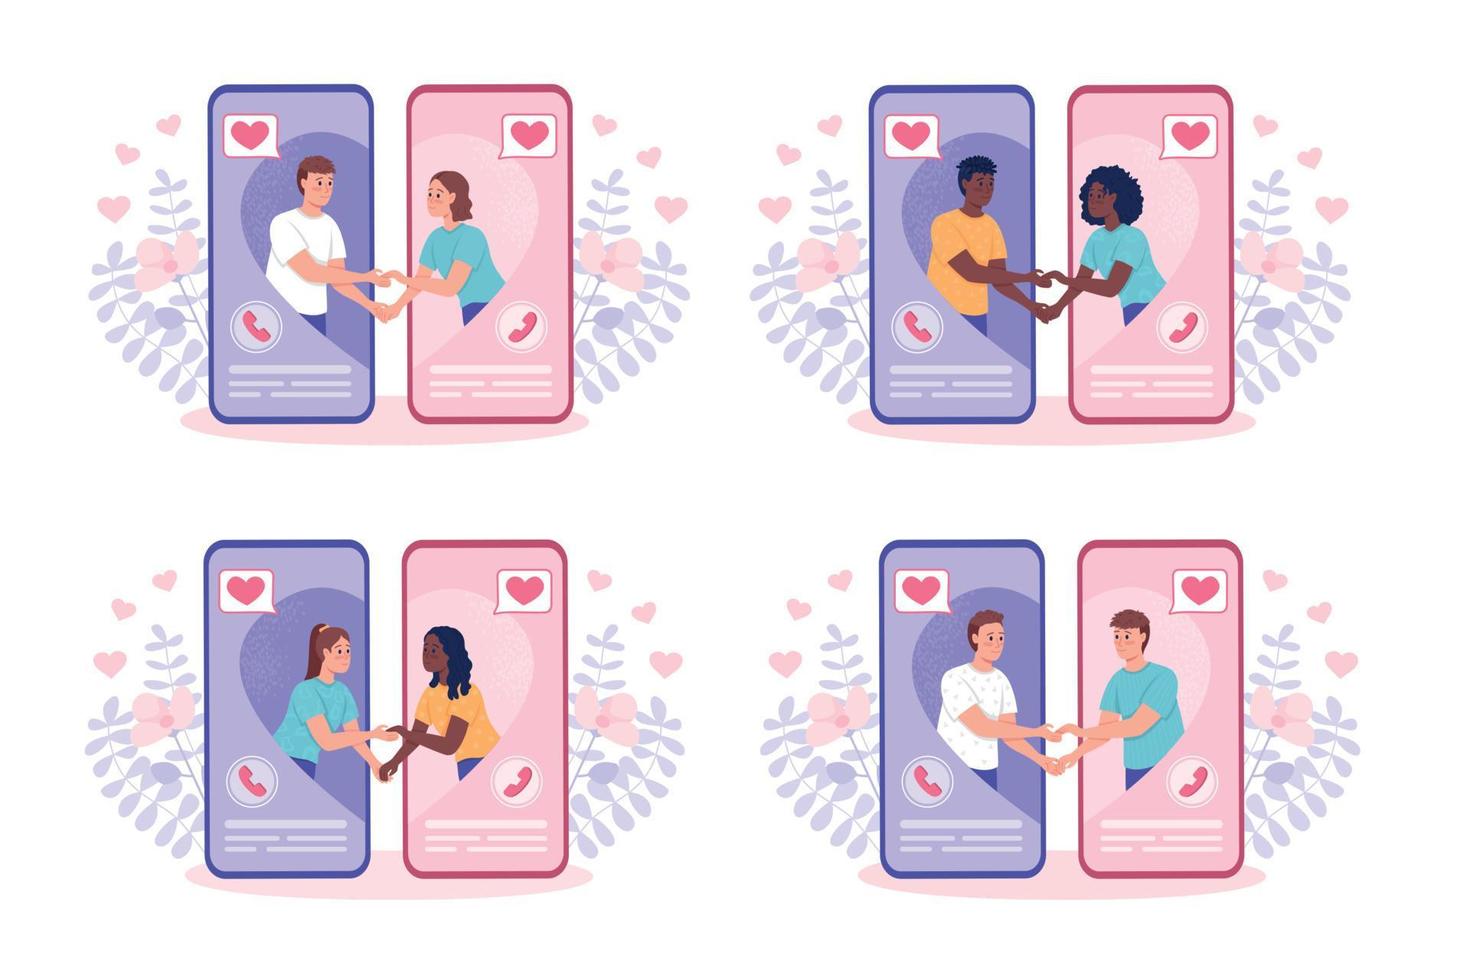 Finding ideal partner through dating app flat concept vector illustrations set